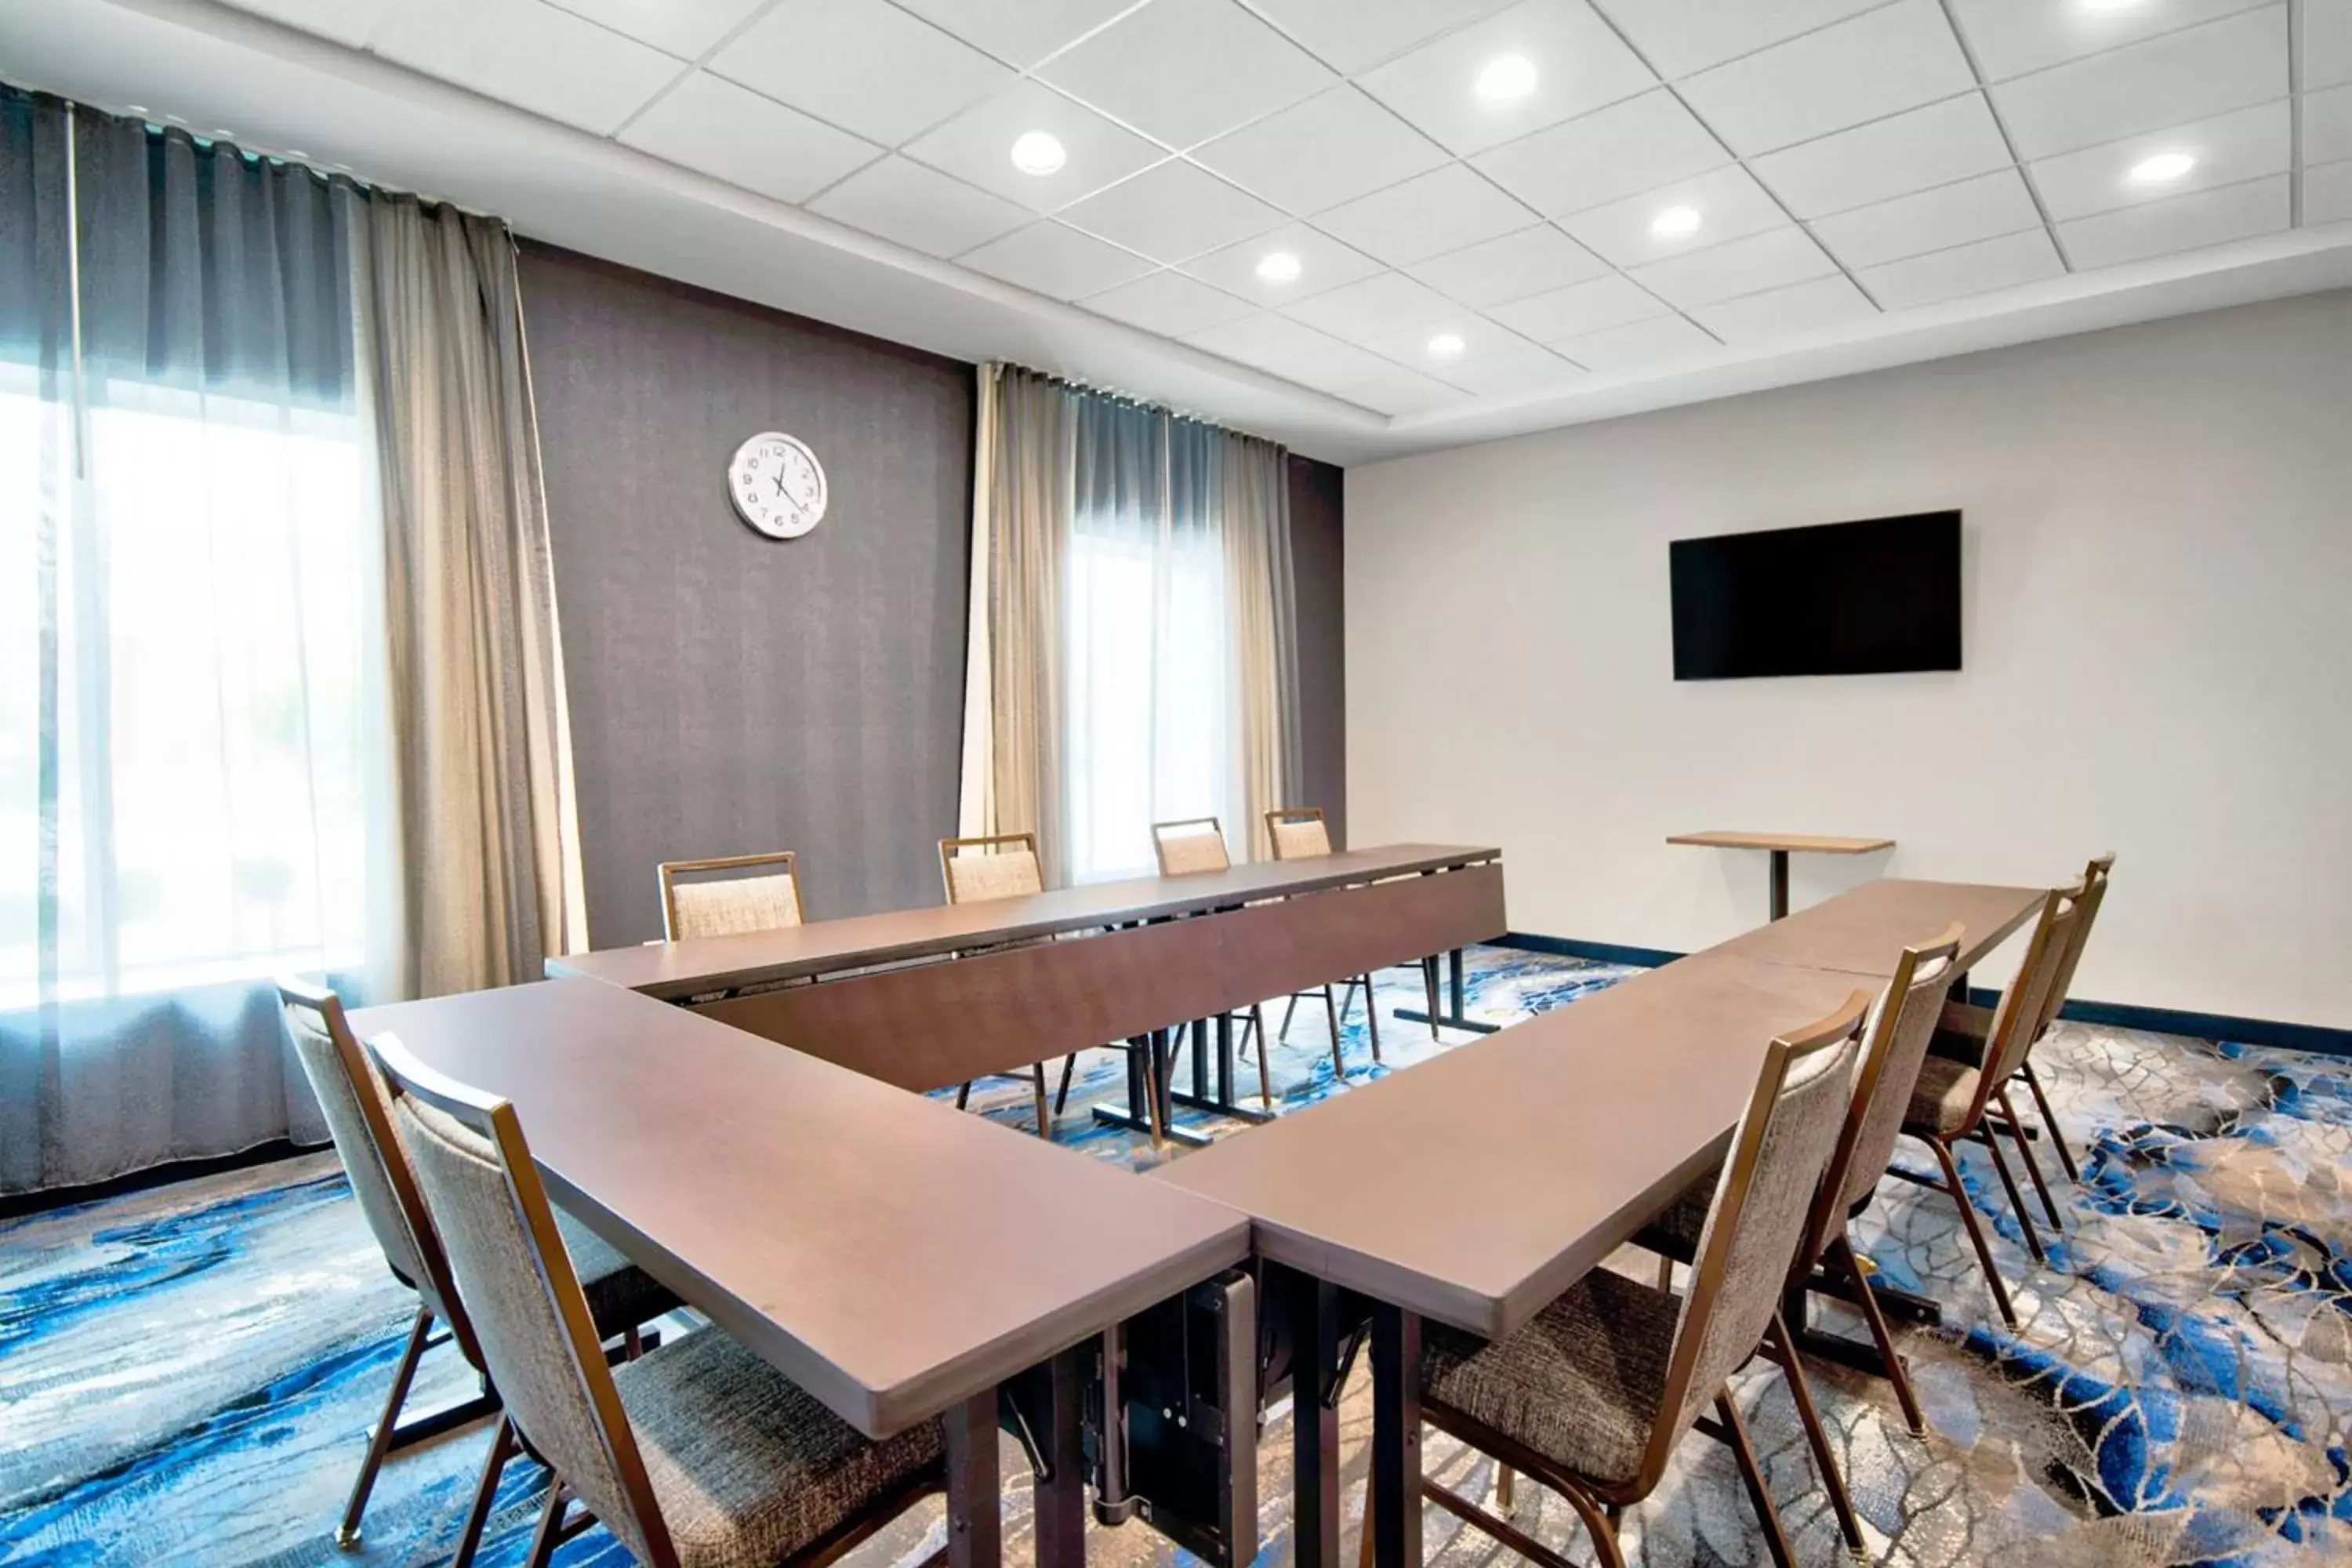 Meeting/conference room in Fairfield by Marriott Inn & Suites Cincinnati North West Chester